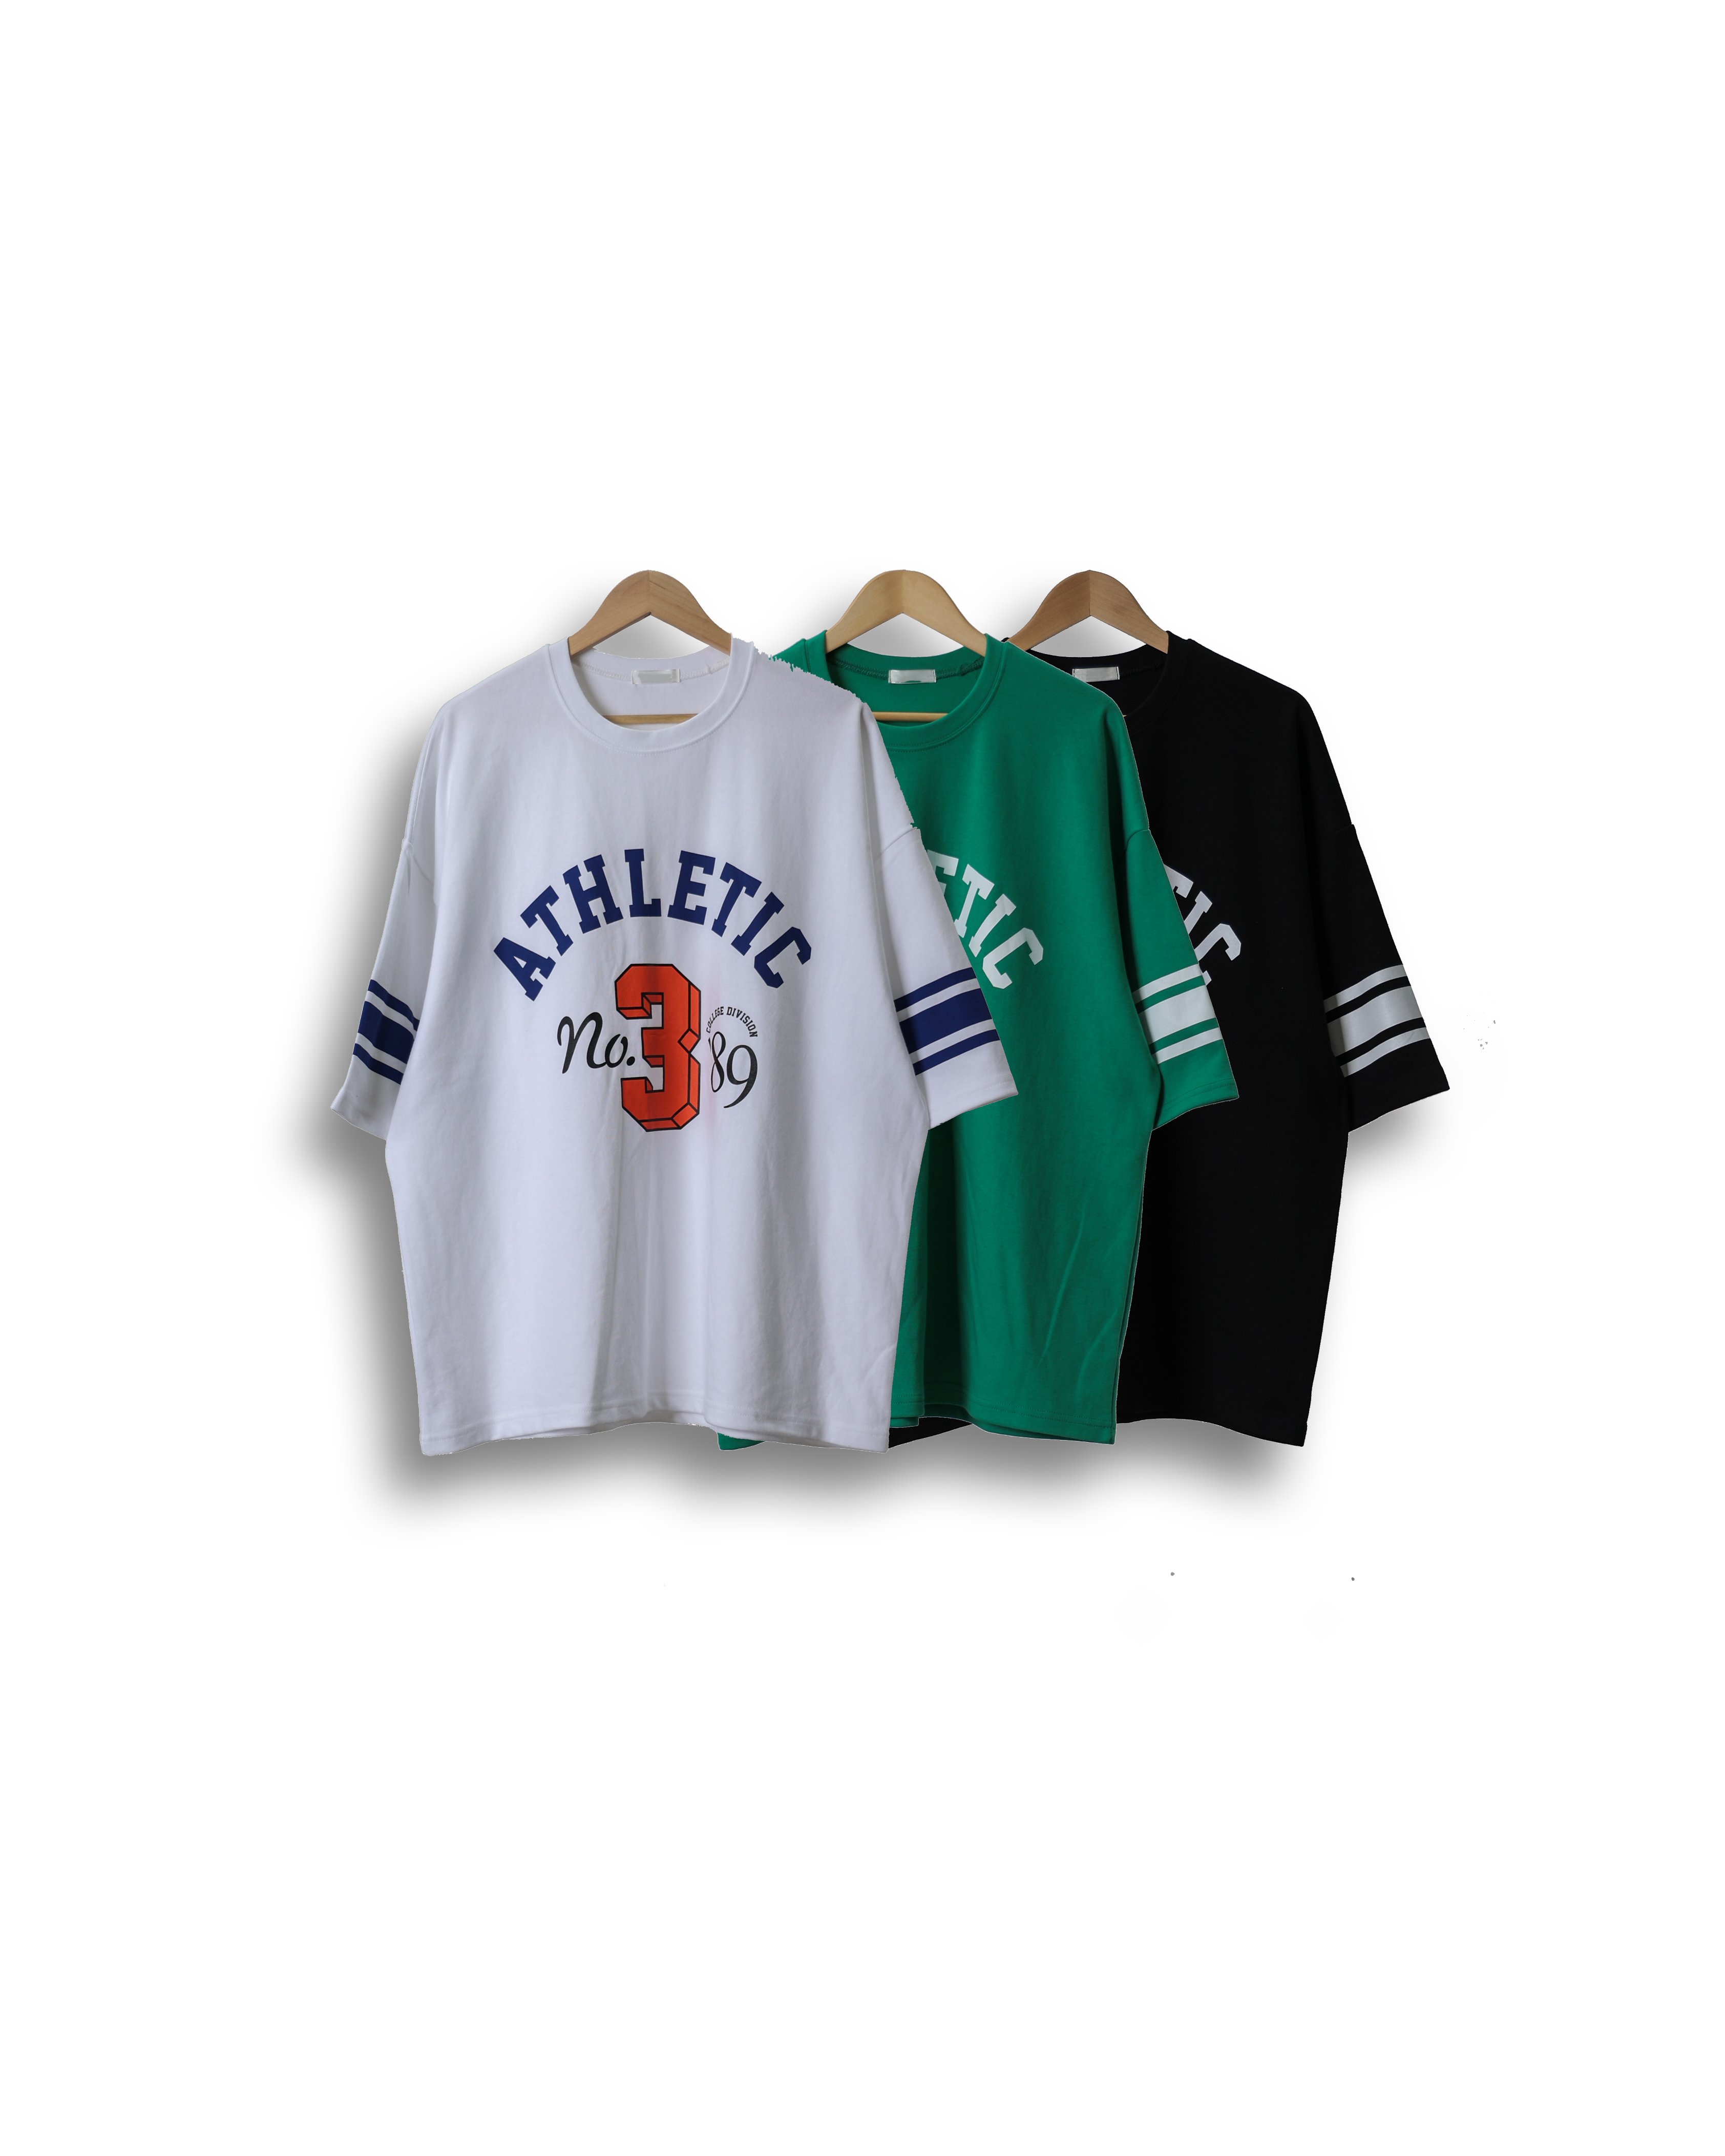 MILK.B ATHLETIC NO.3 Football T Shirts (Black/Green/White)